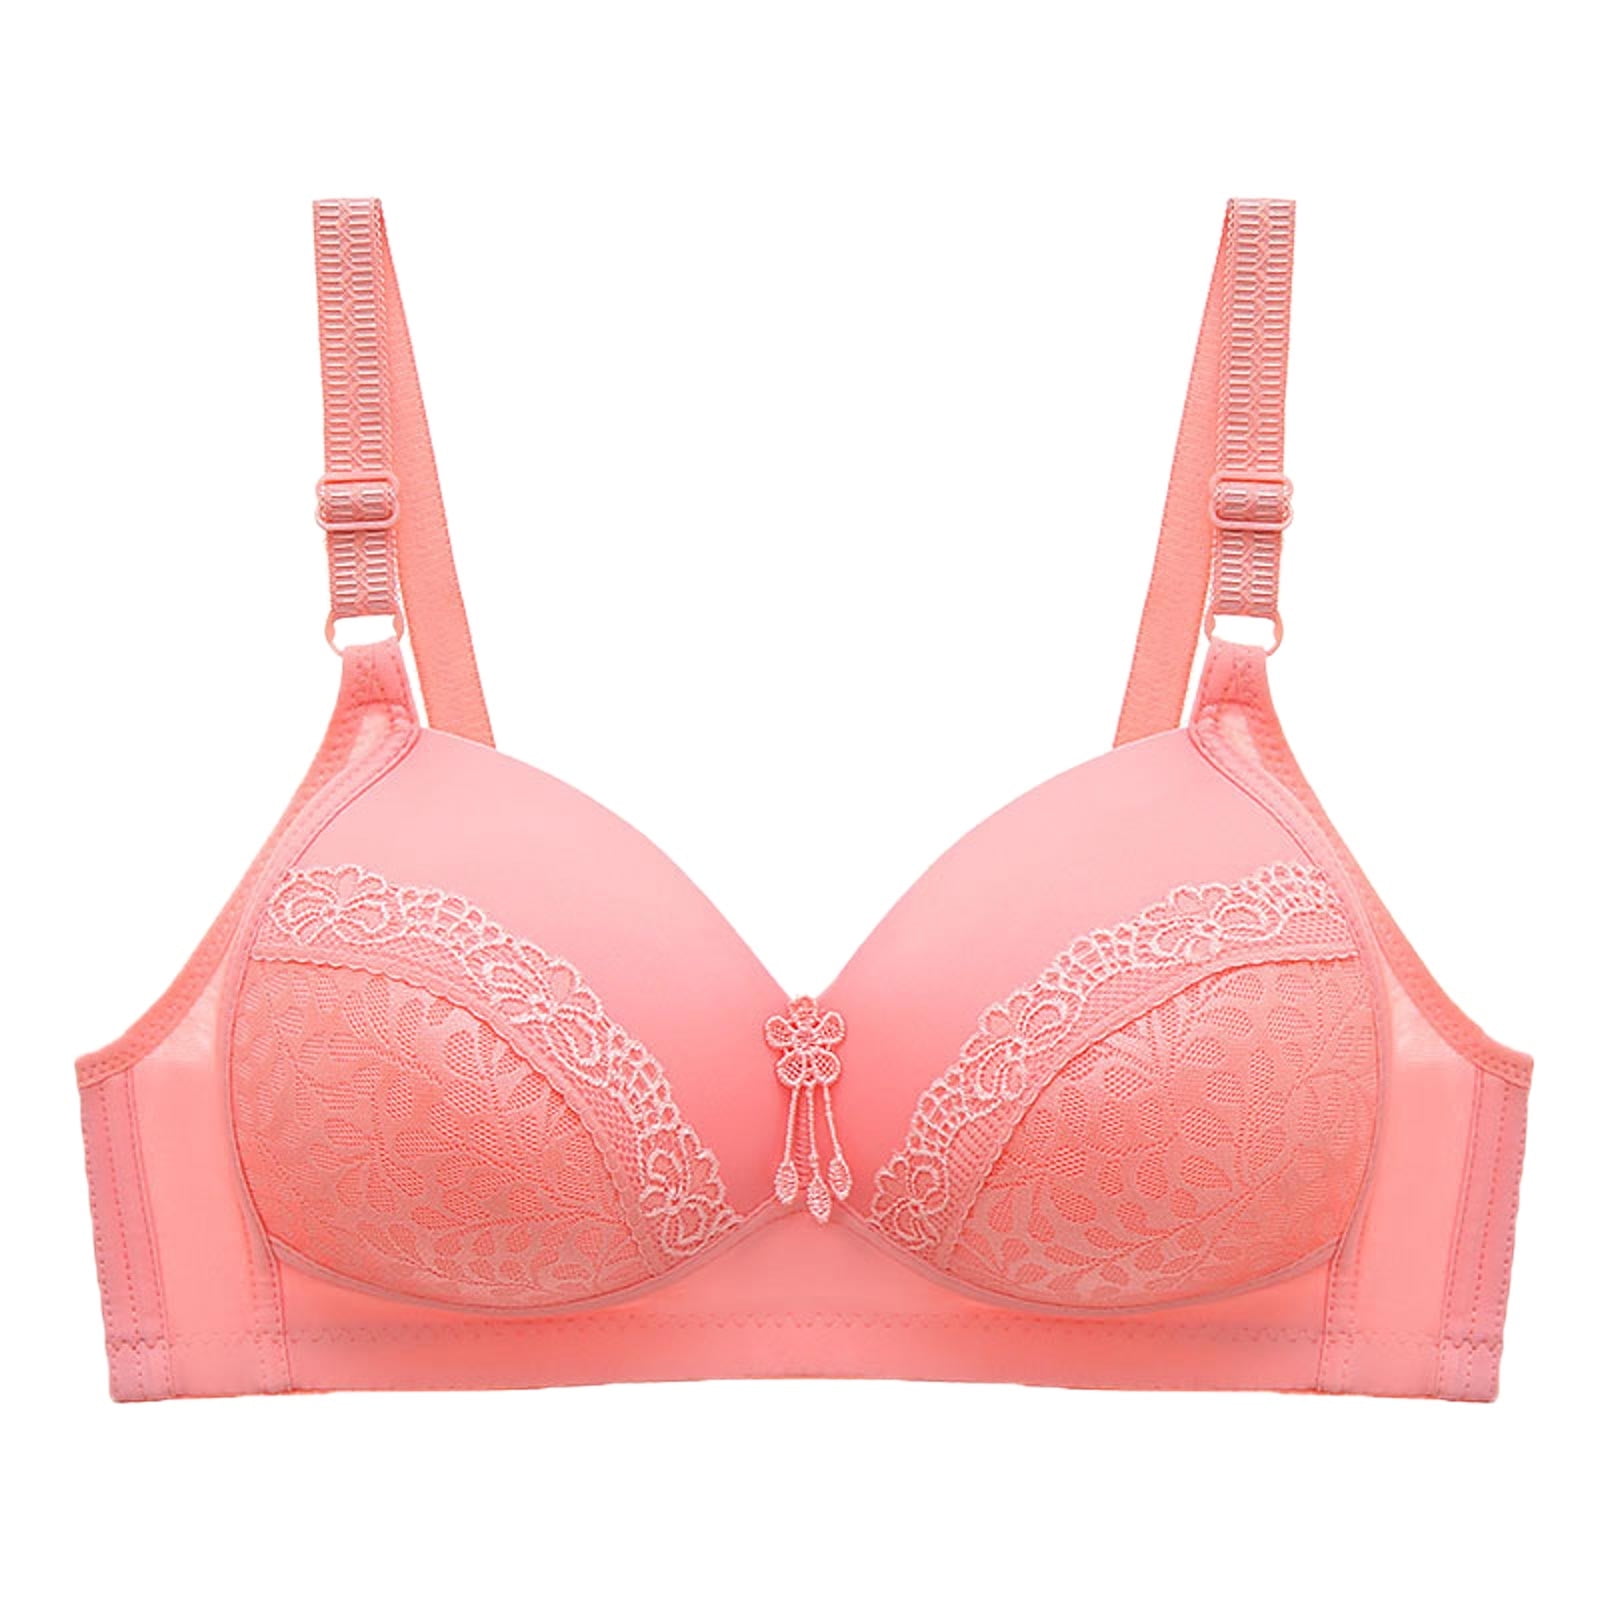 Buy Bebe women 3 pieces printed push up bra pink and black Online